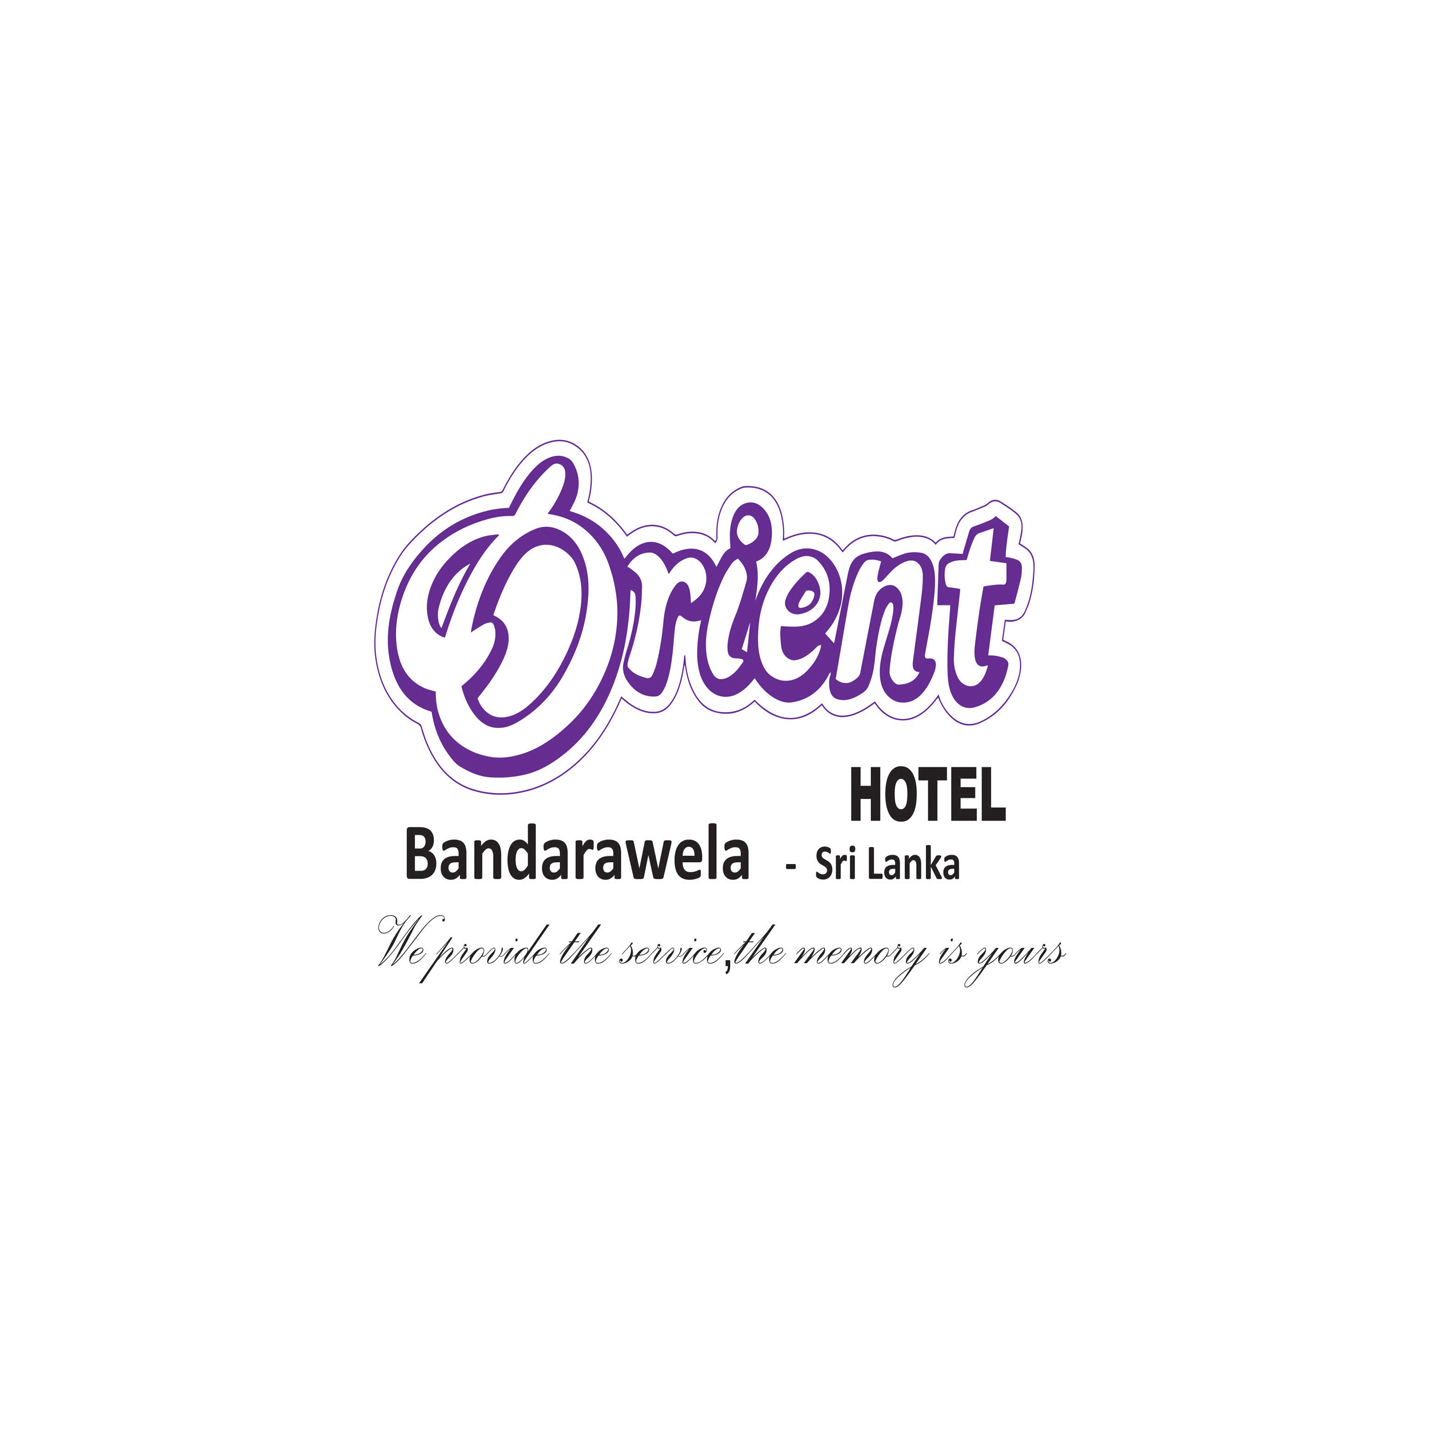 ORIENT HOTEL - BANDARAWELA